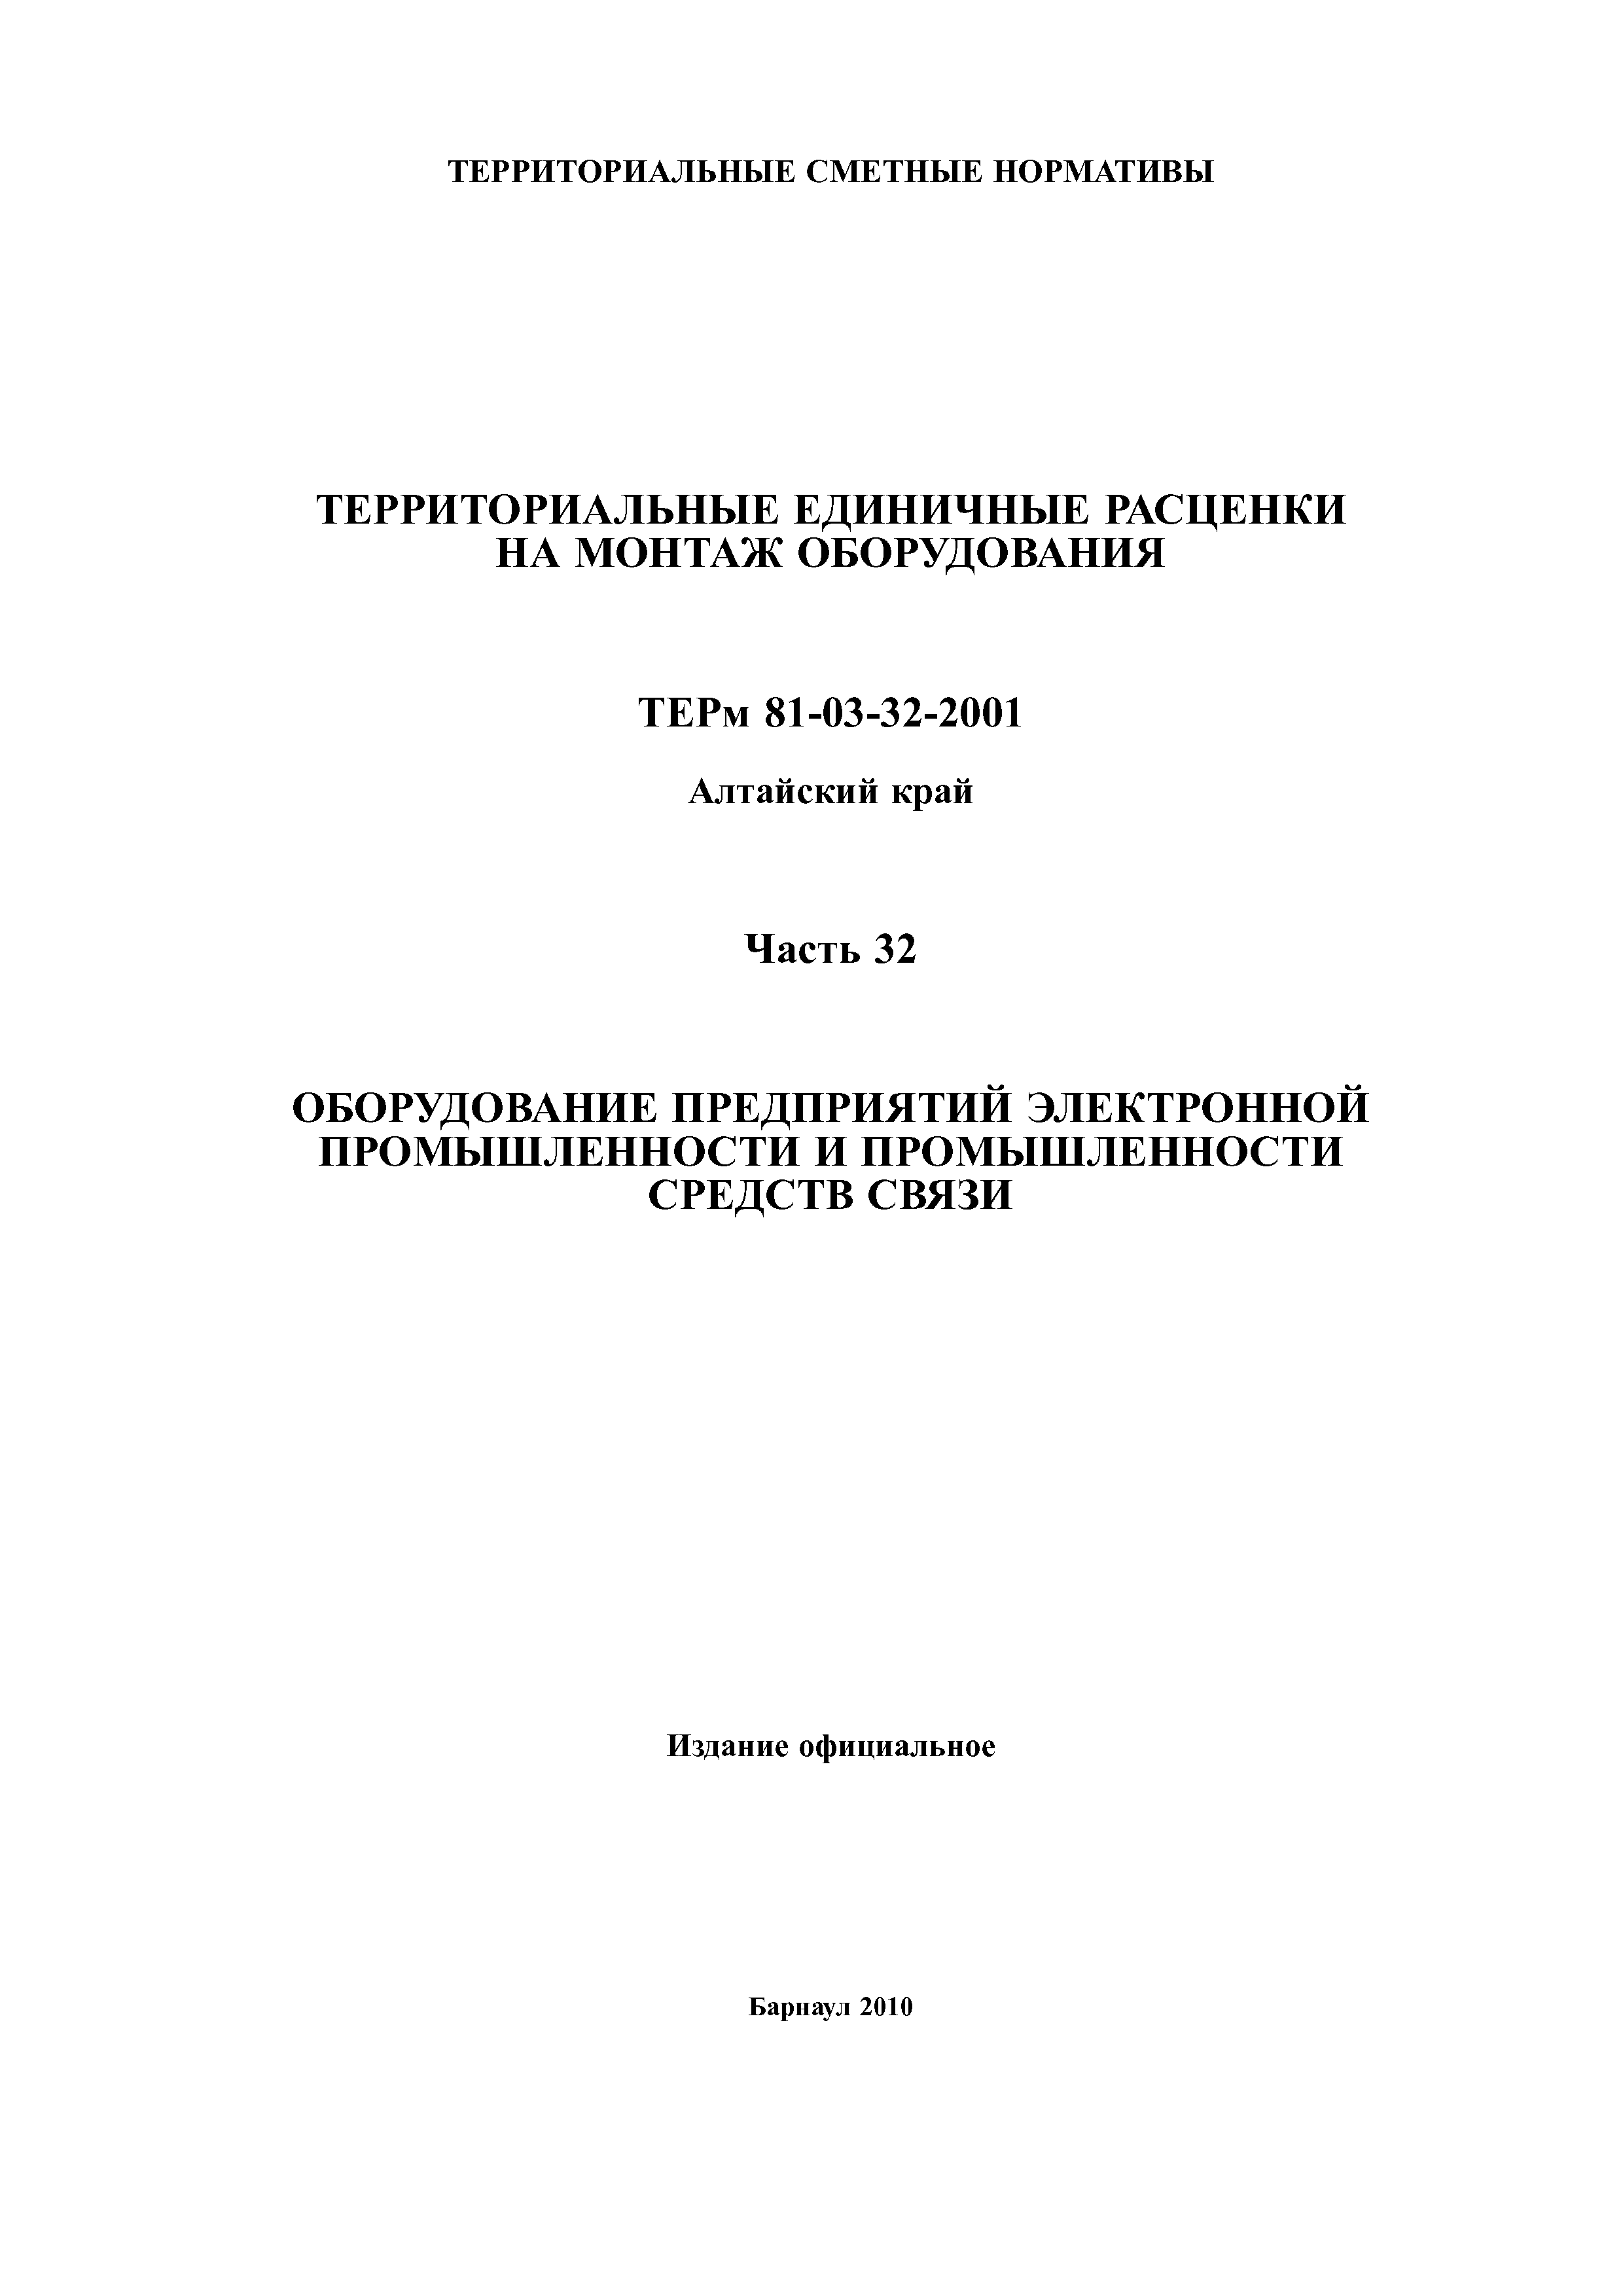 ТЕРм Алтайский край 81-03-32-2001